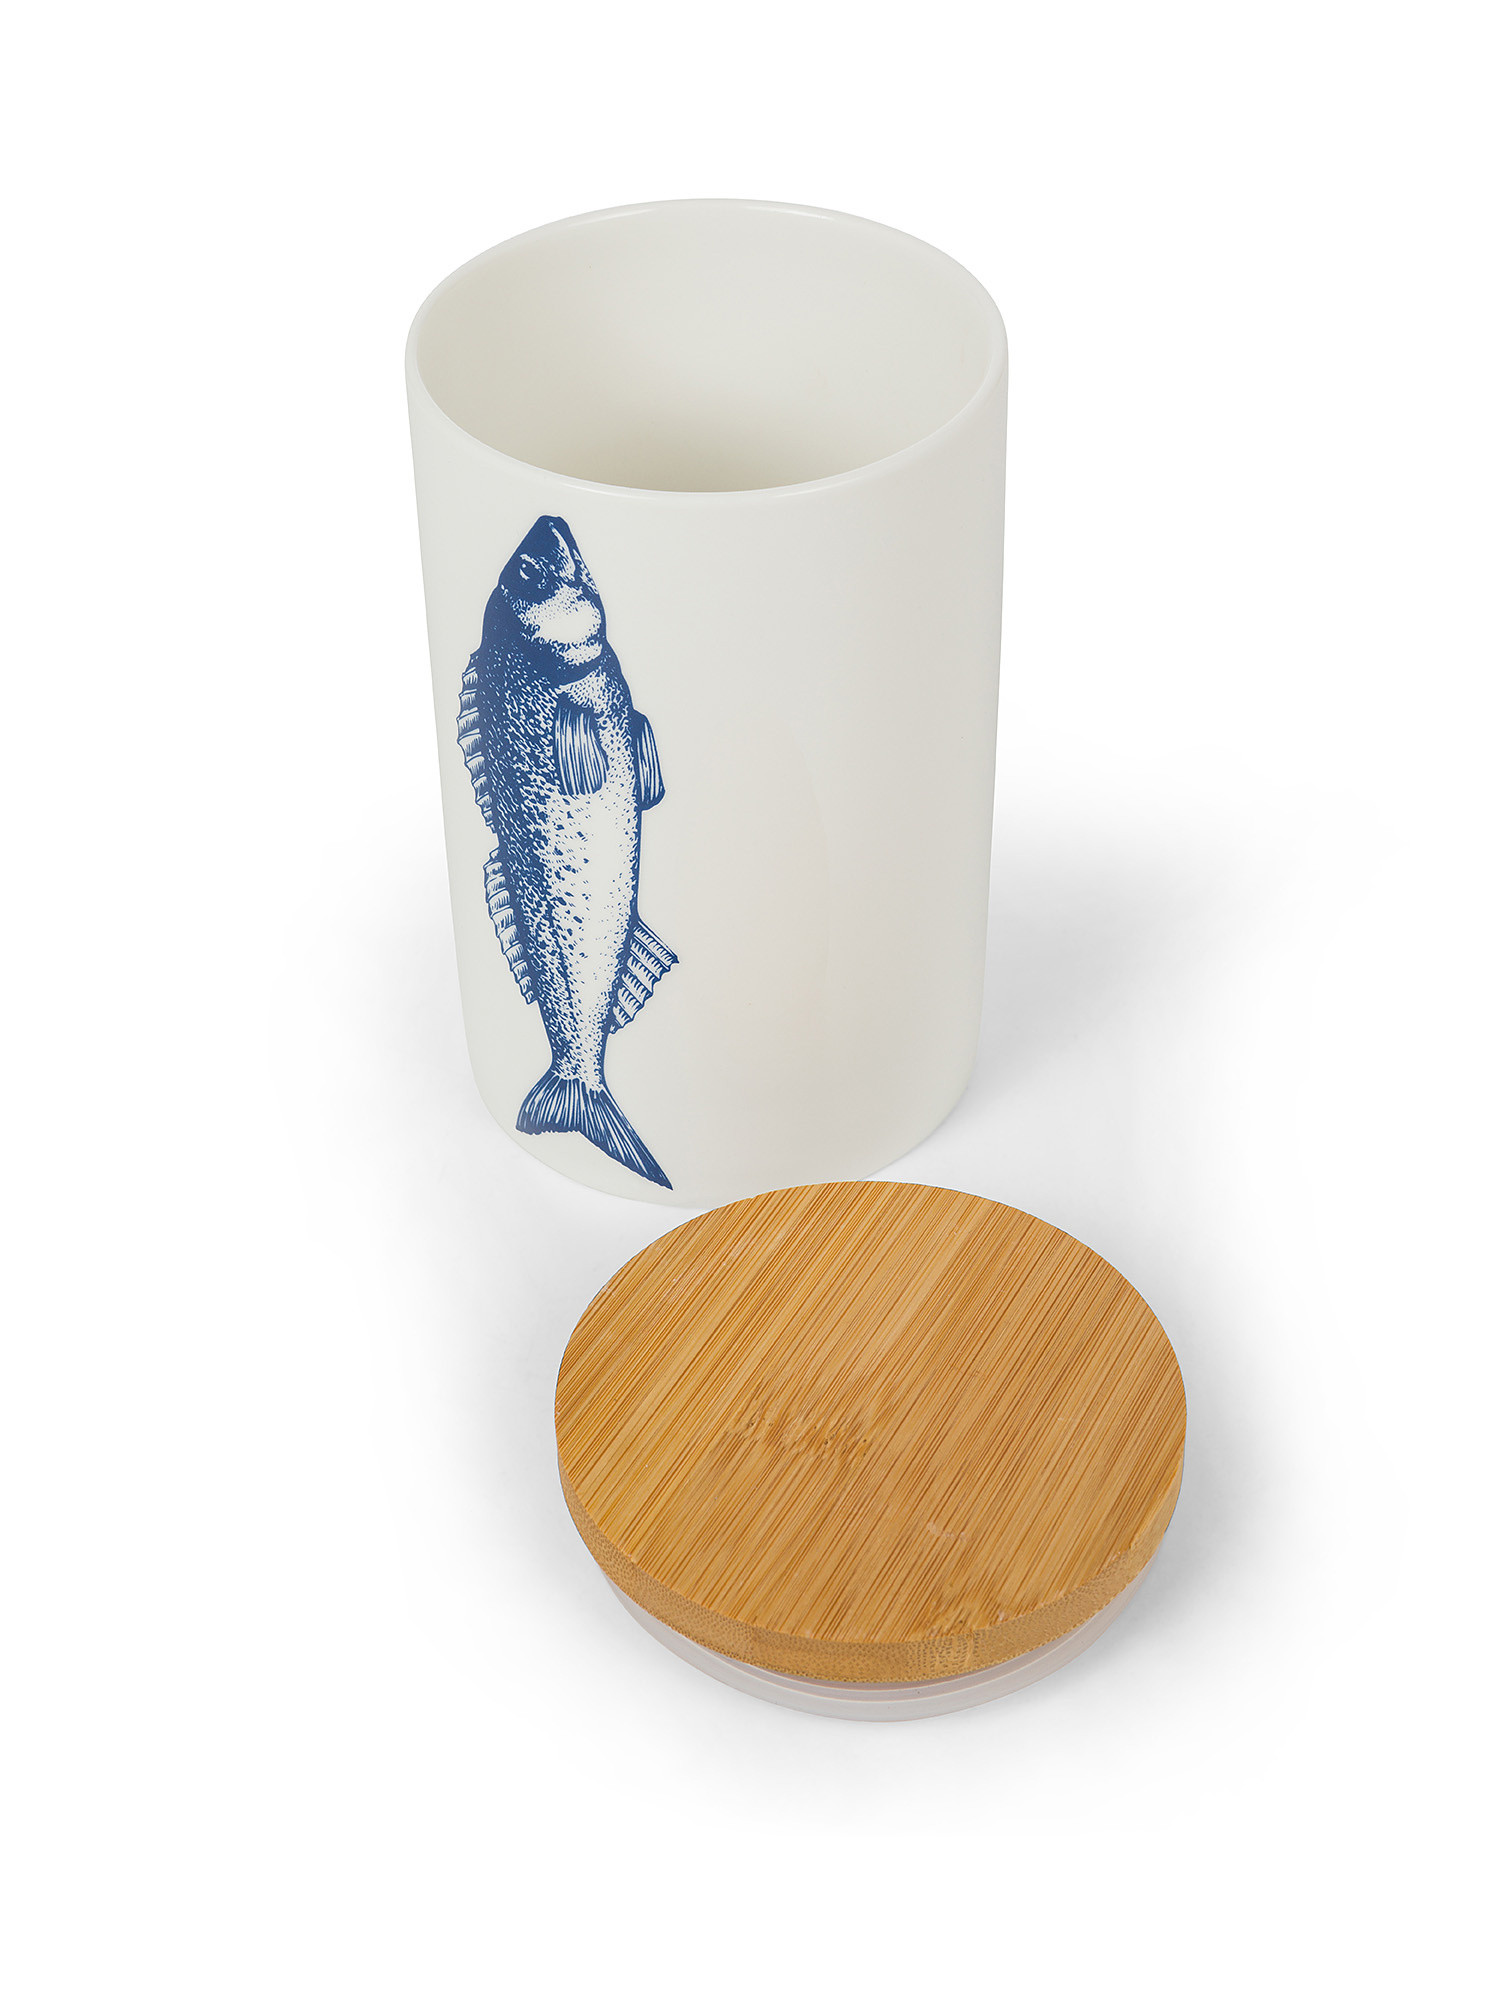 New bone china jar with fish motif, White, large image number 1